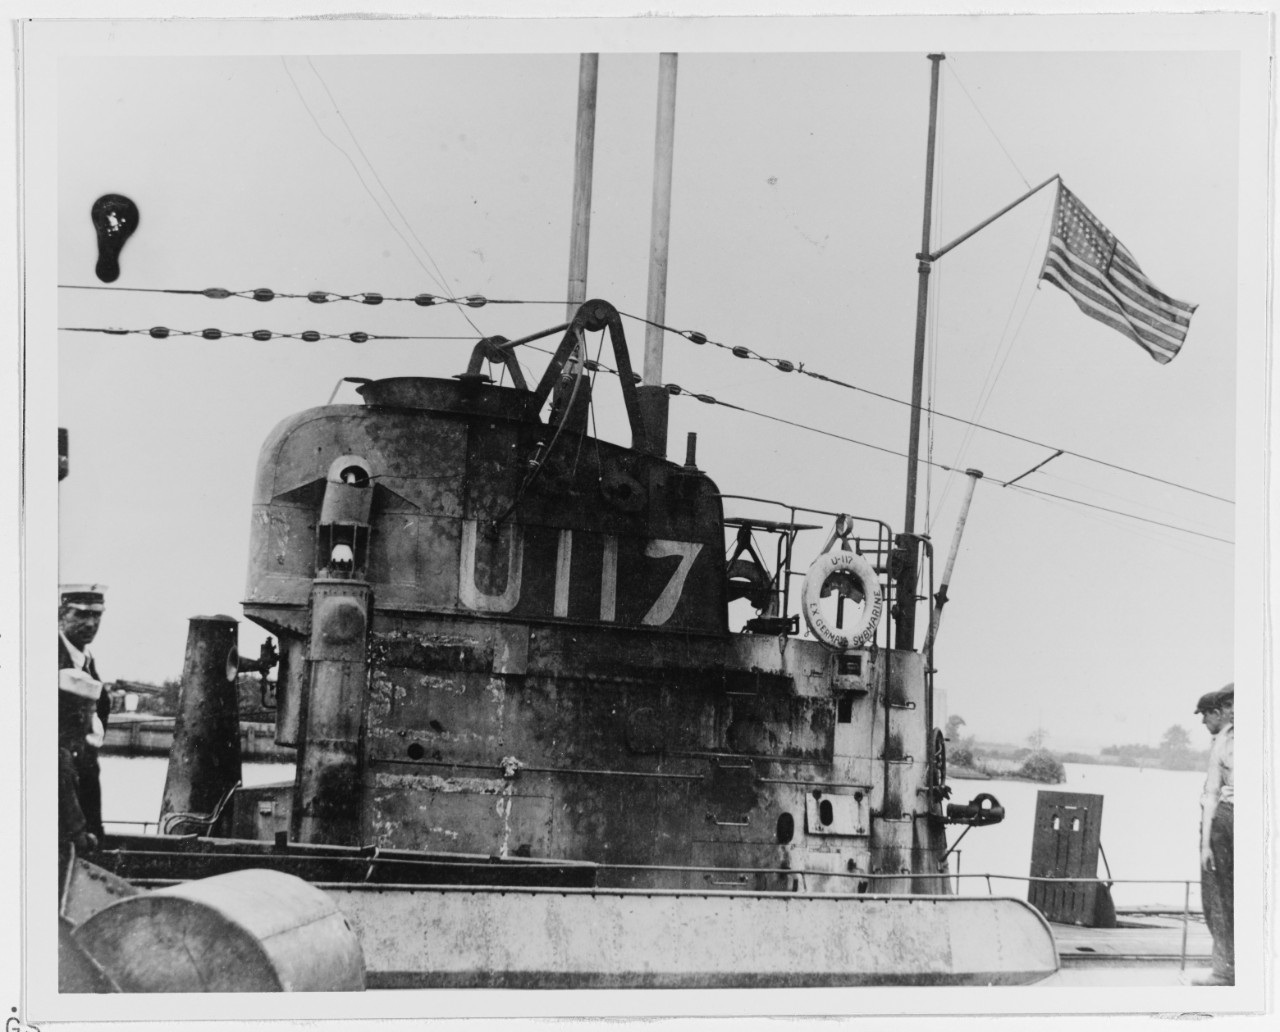 U-117 (German submarine, 1917-1921)